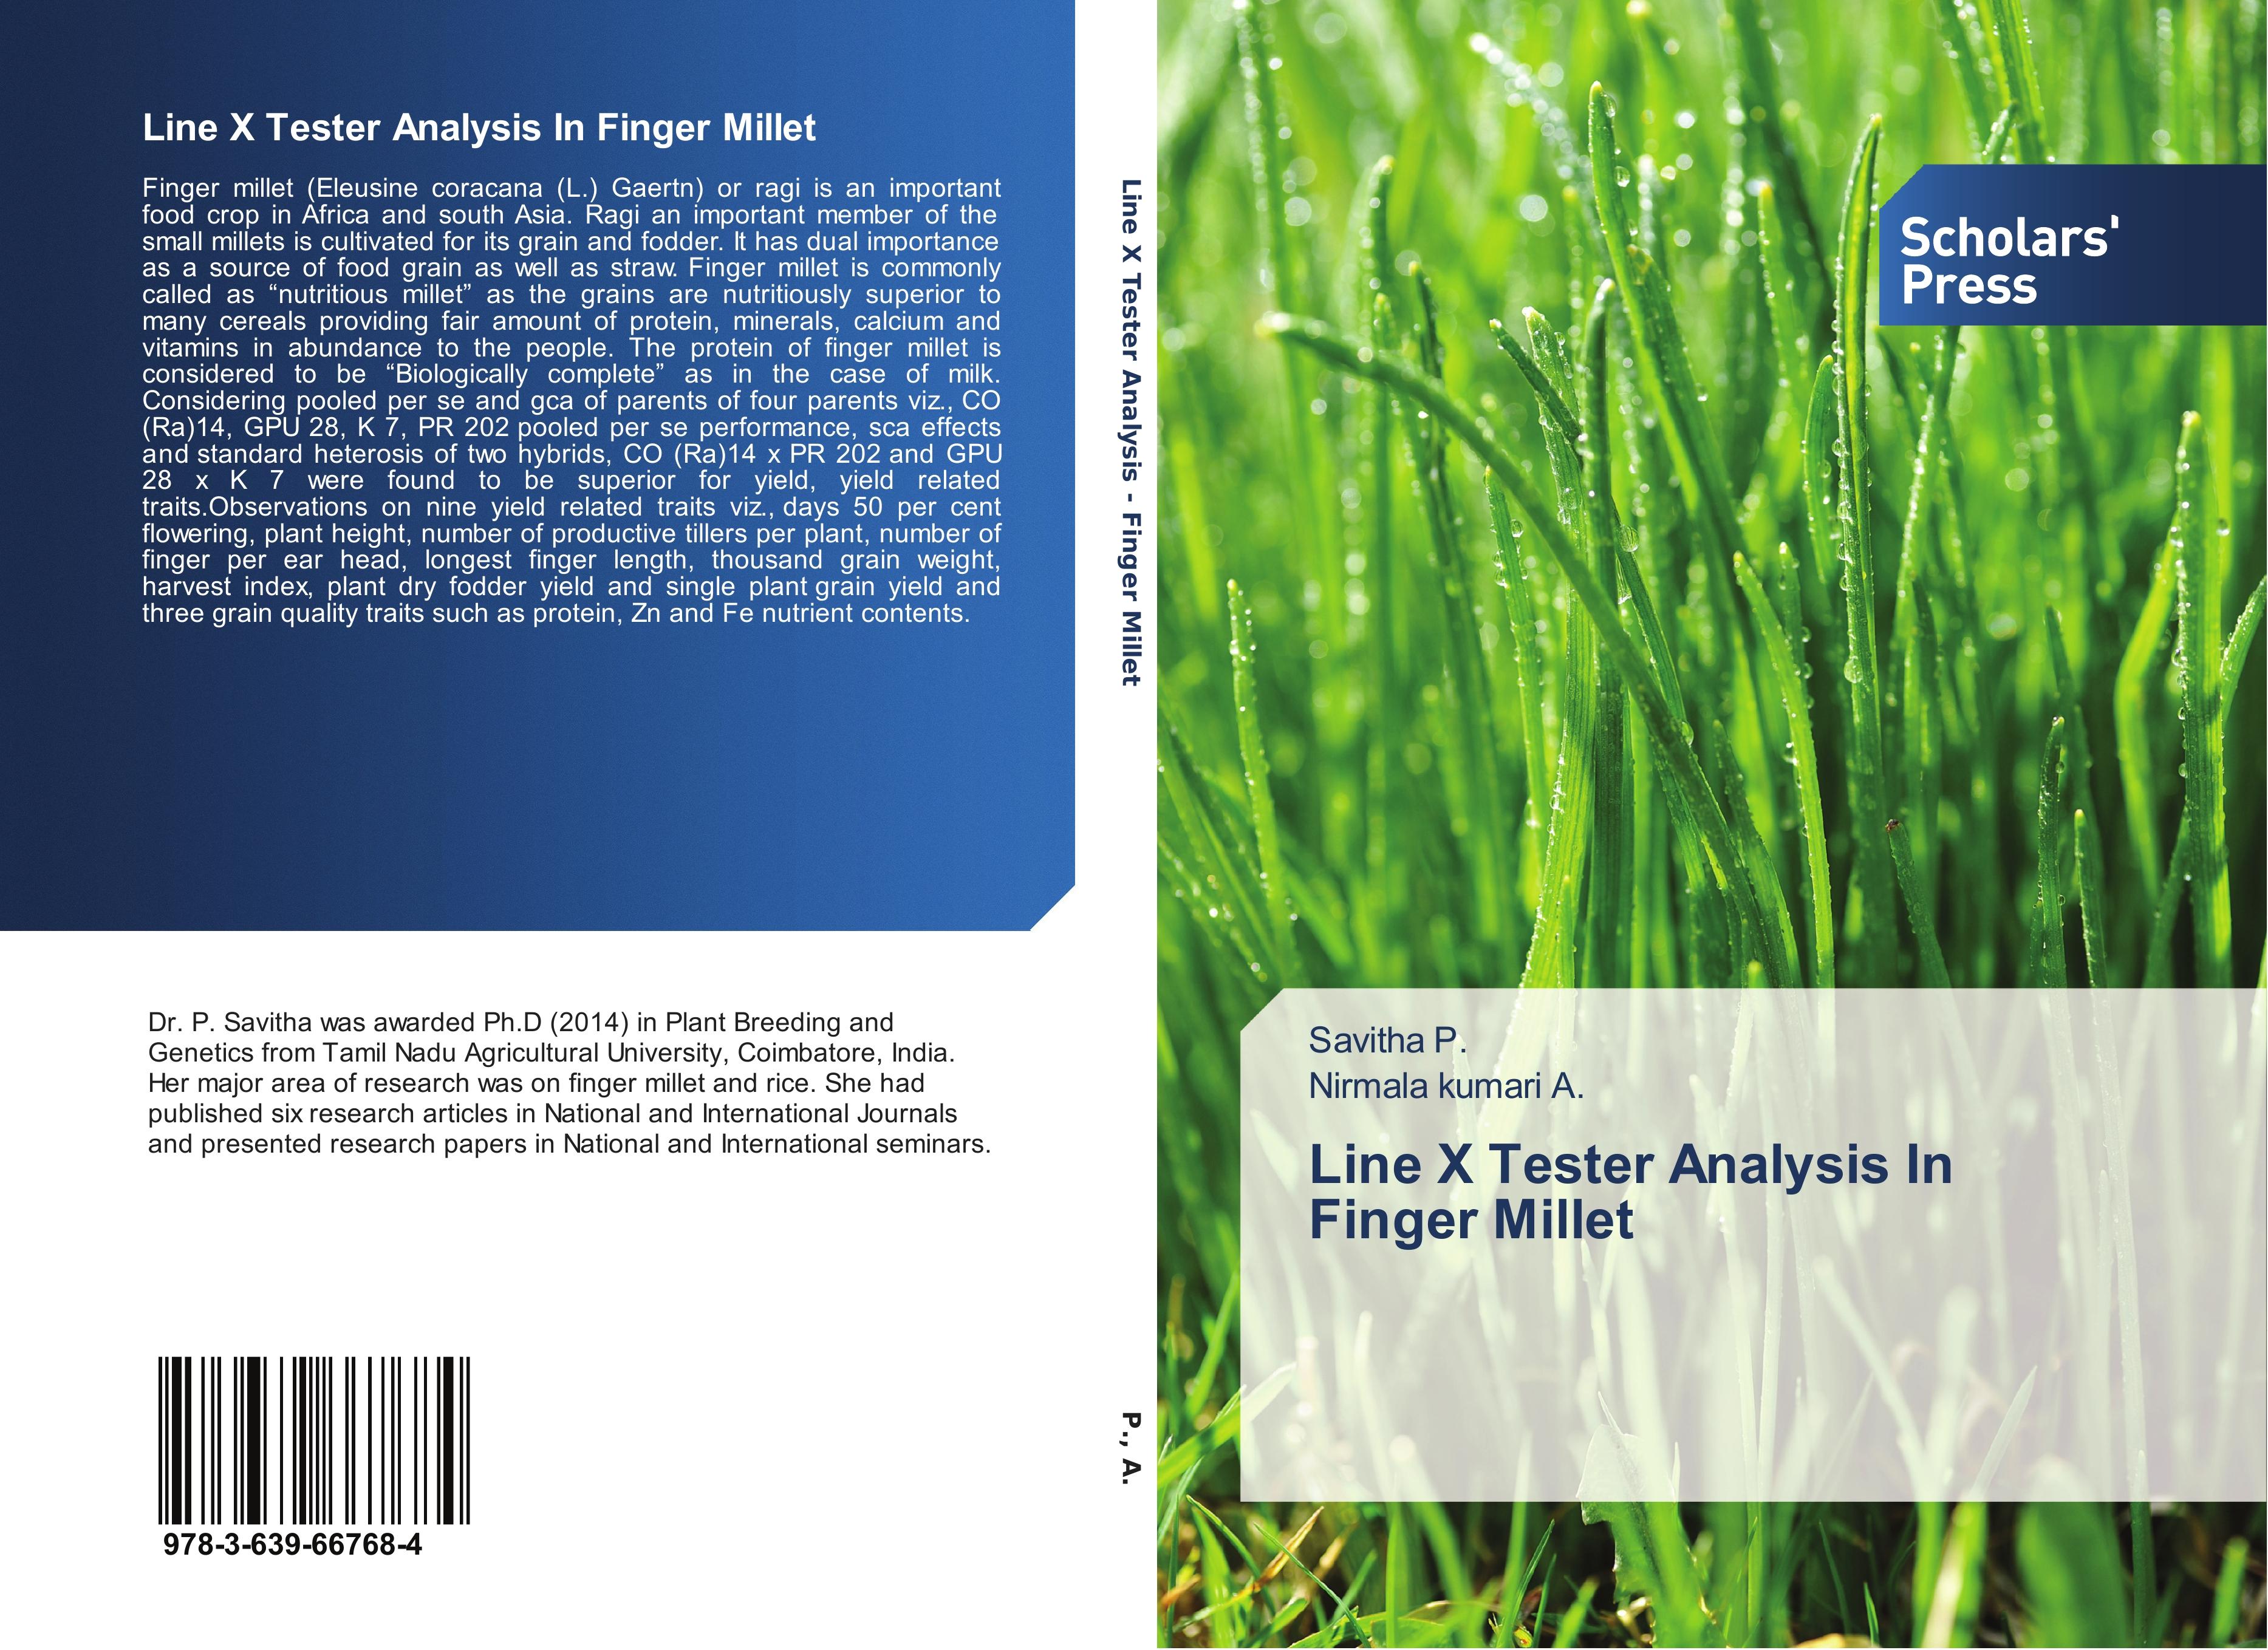 Line X Tester Analysis In Finger Millet - Savitha P. Nirmala kumari A.